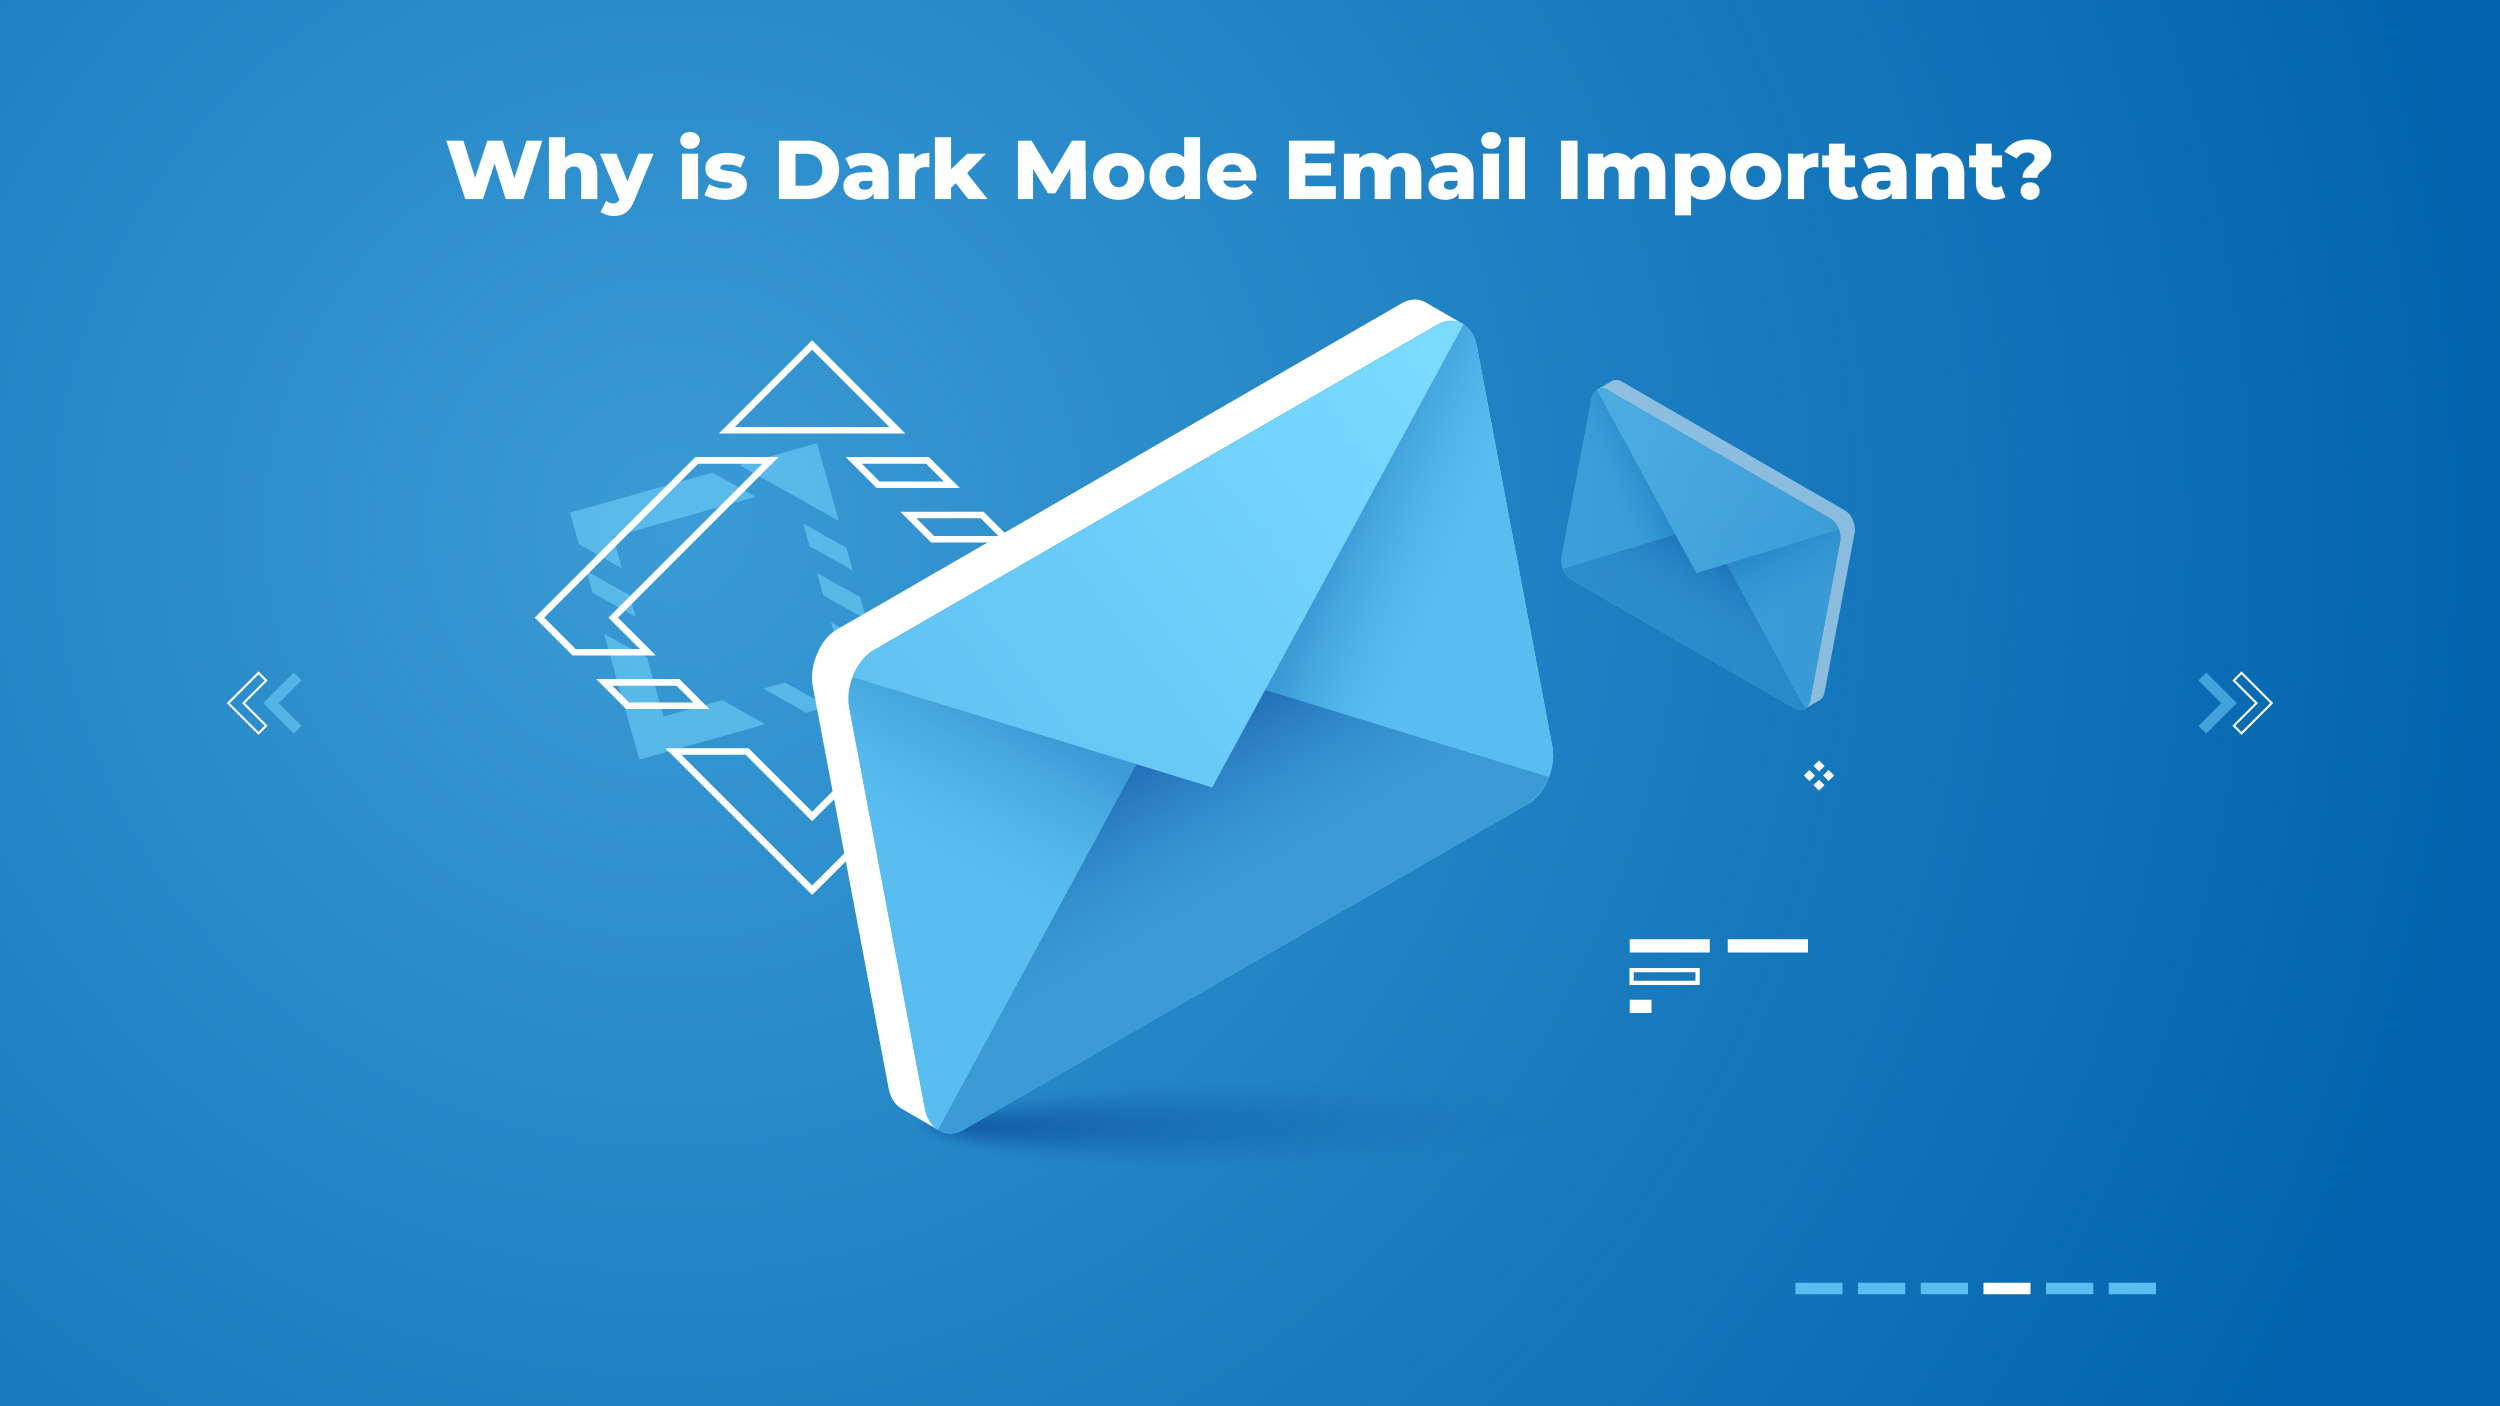 Dark Mode Email